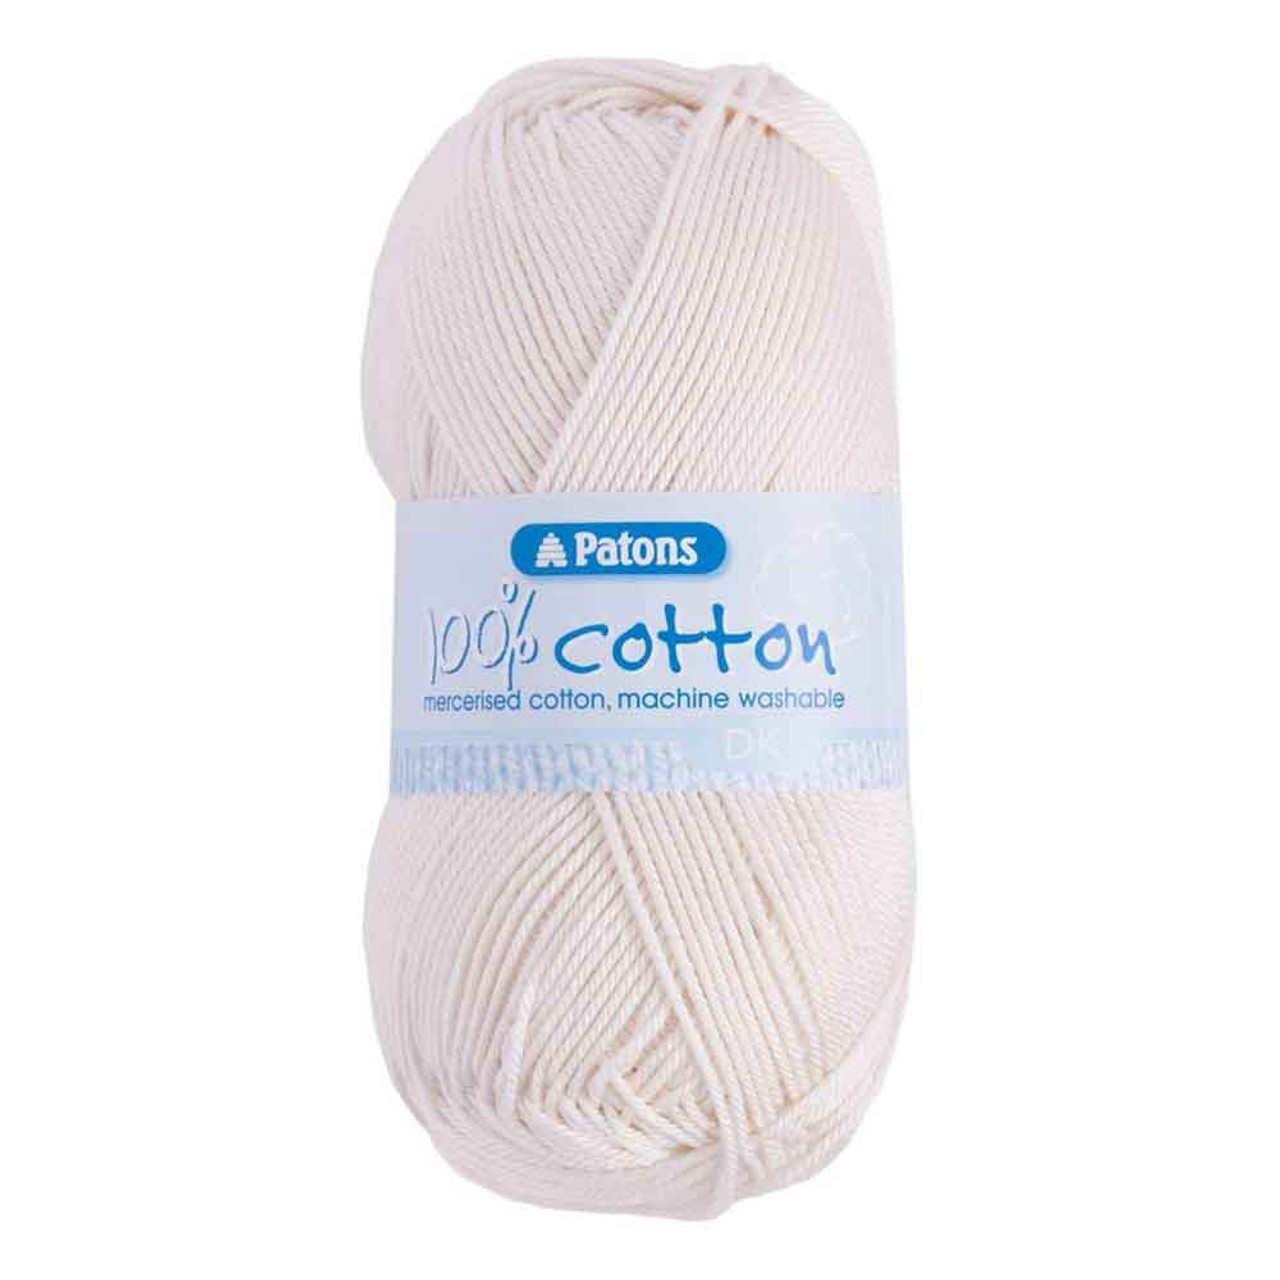 Patons 100% Cotton DK Yarn, 100g | Outback Yarns